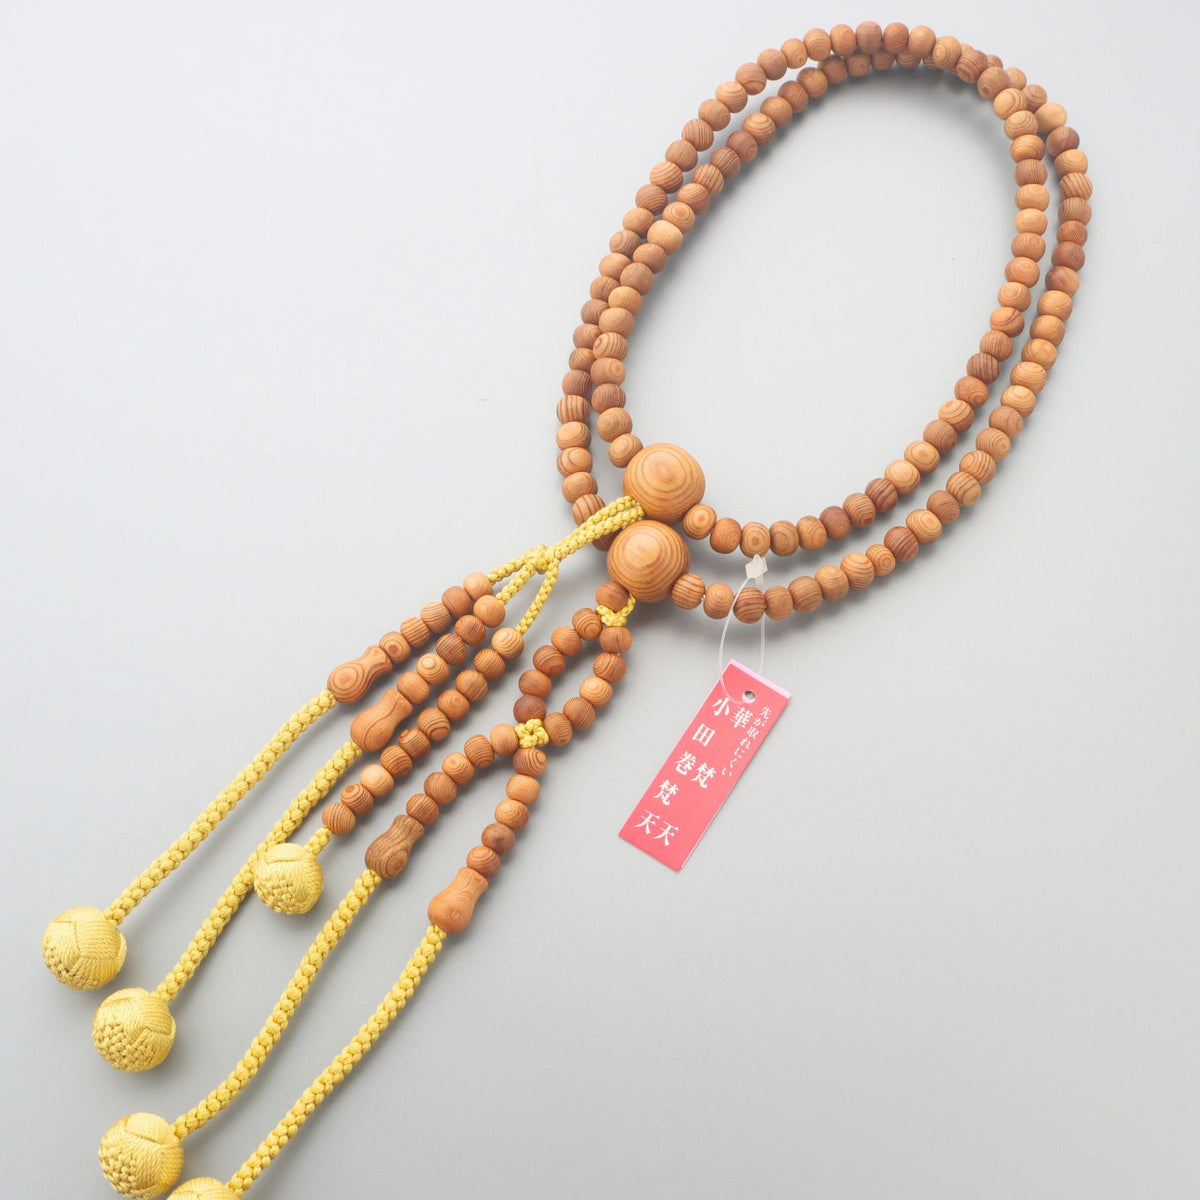 京仏壇はやし 数珠 日蓮宗 尺二 茶水晶 (男性用) 正式 本式 数珠袋